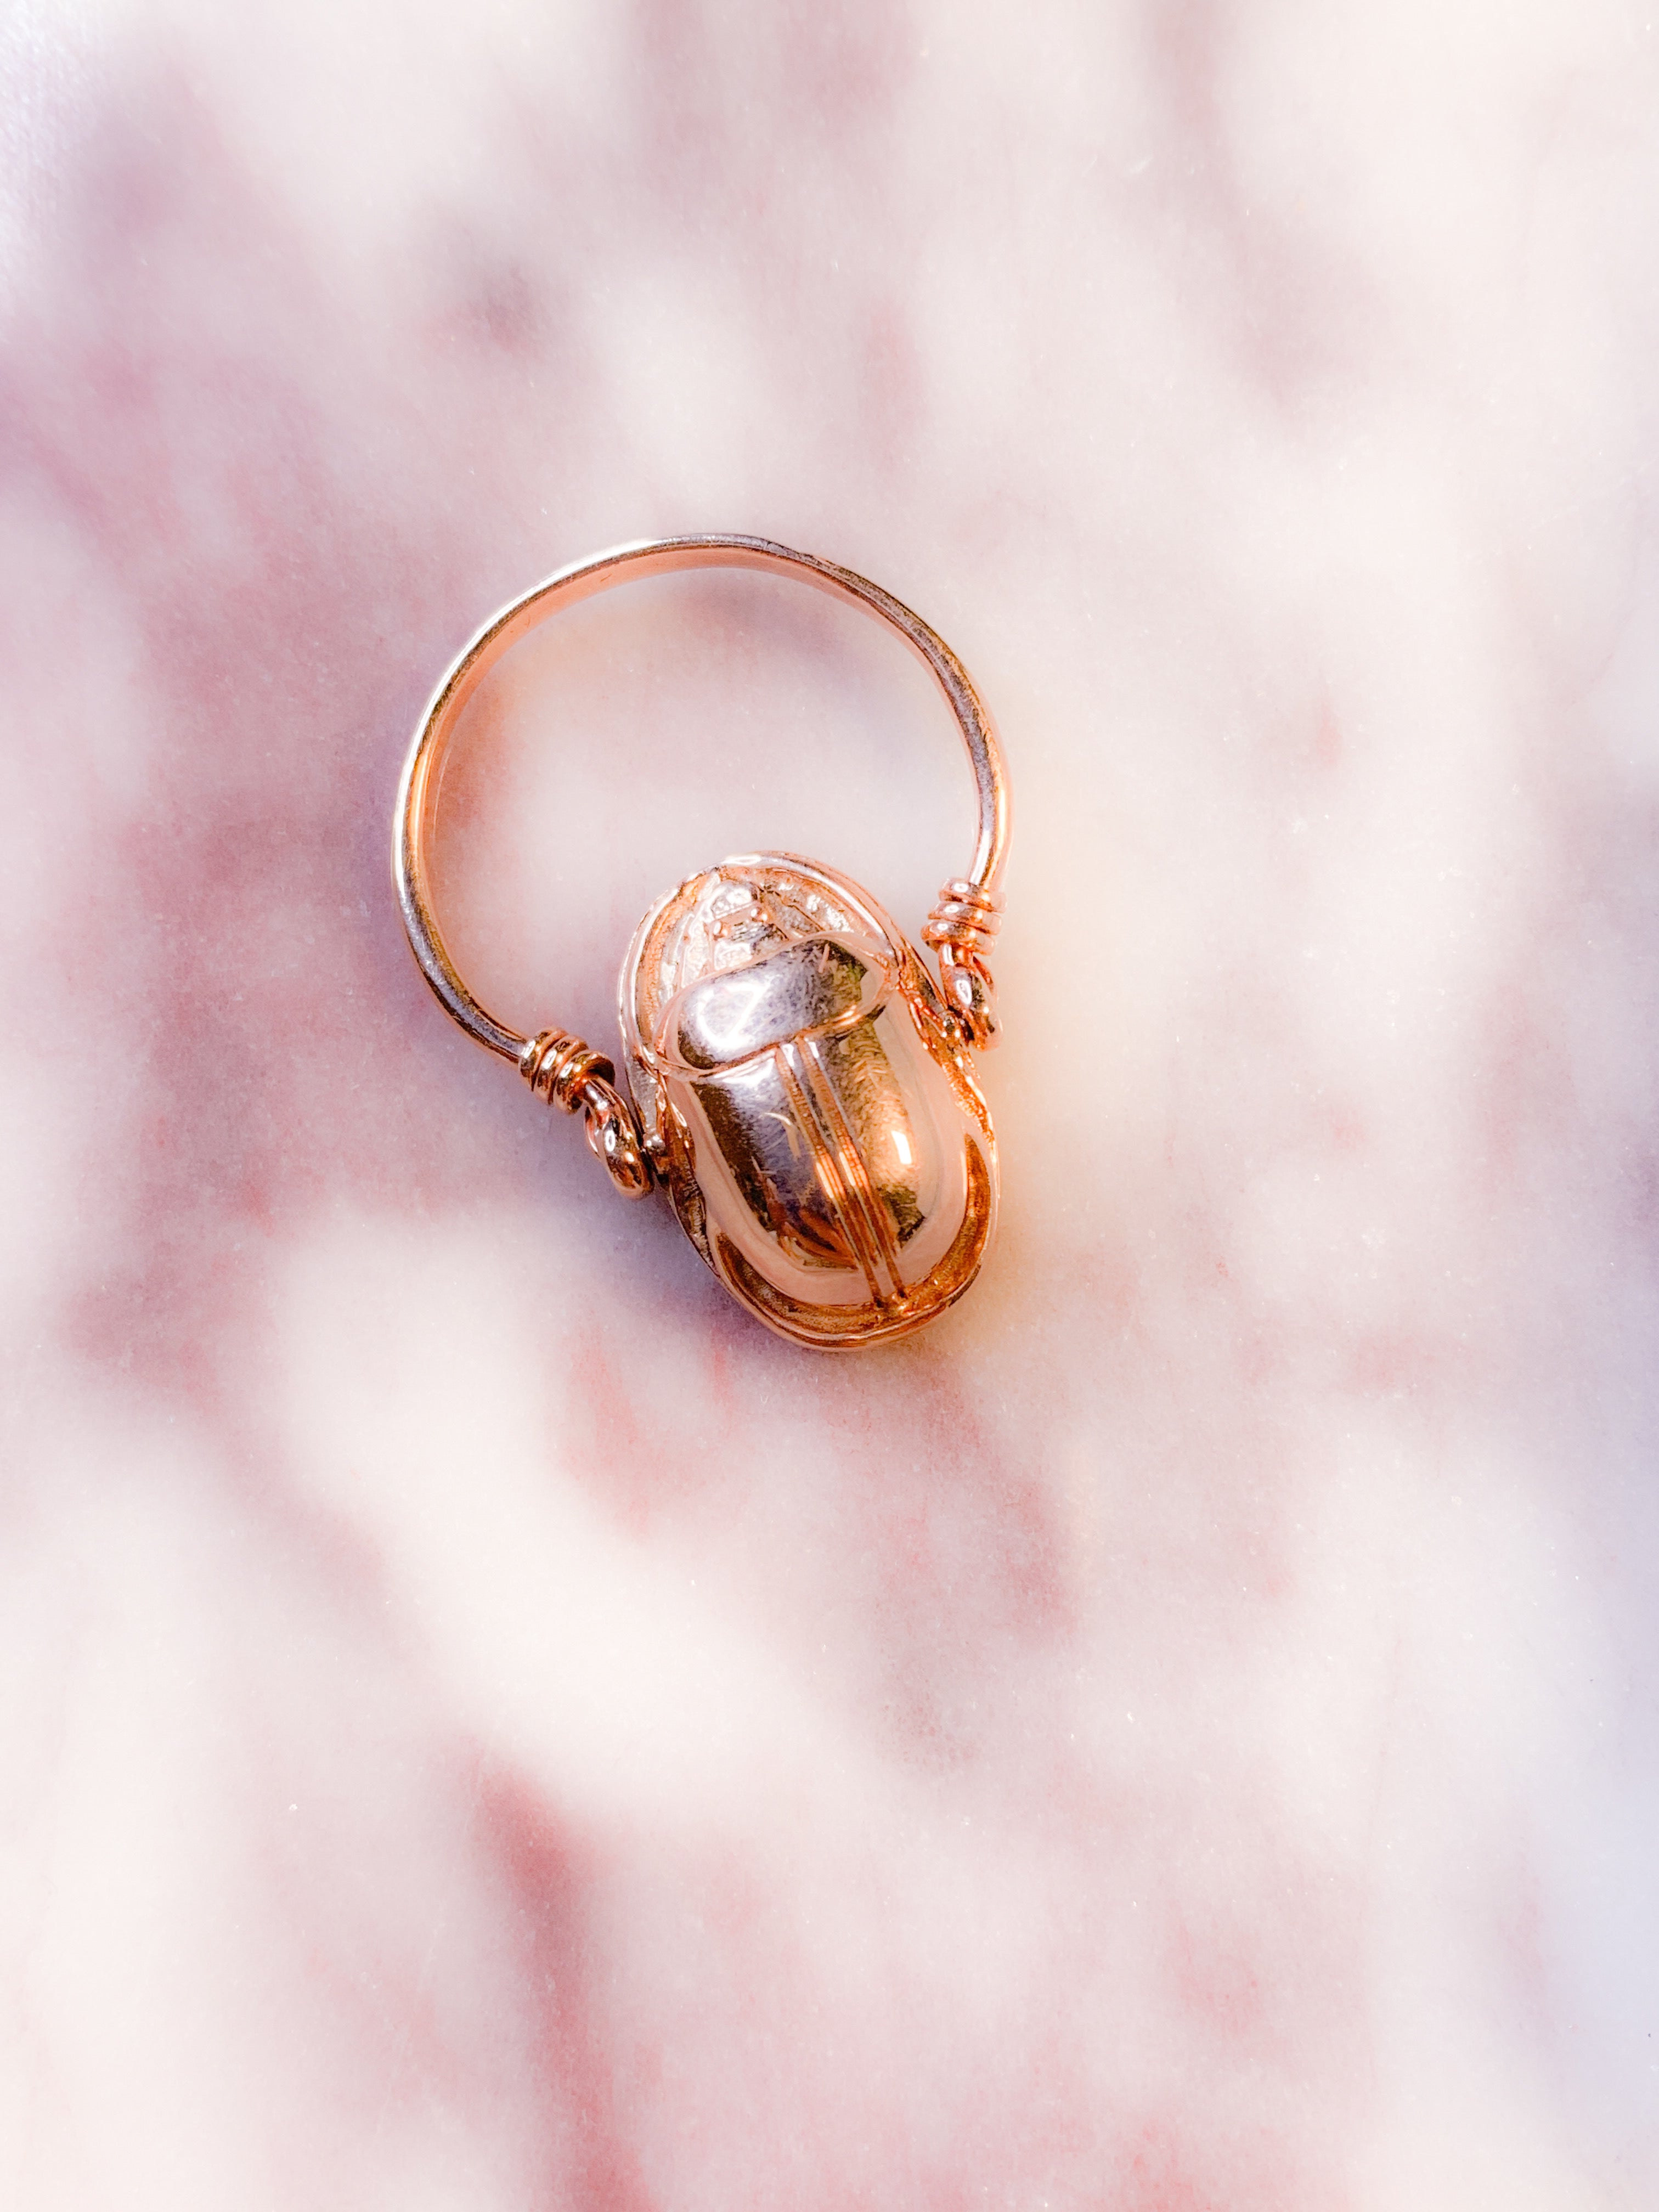 14ct Pink Gold Scarab Flip Ring Size 7.5-8  Weight: 5.4g